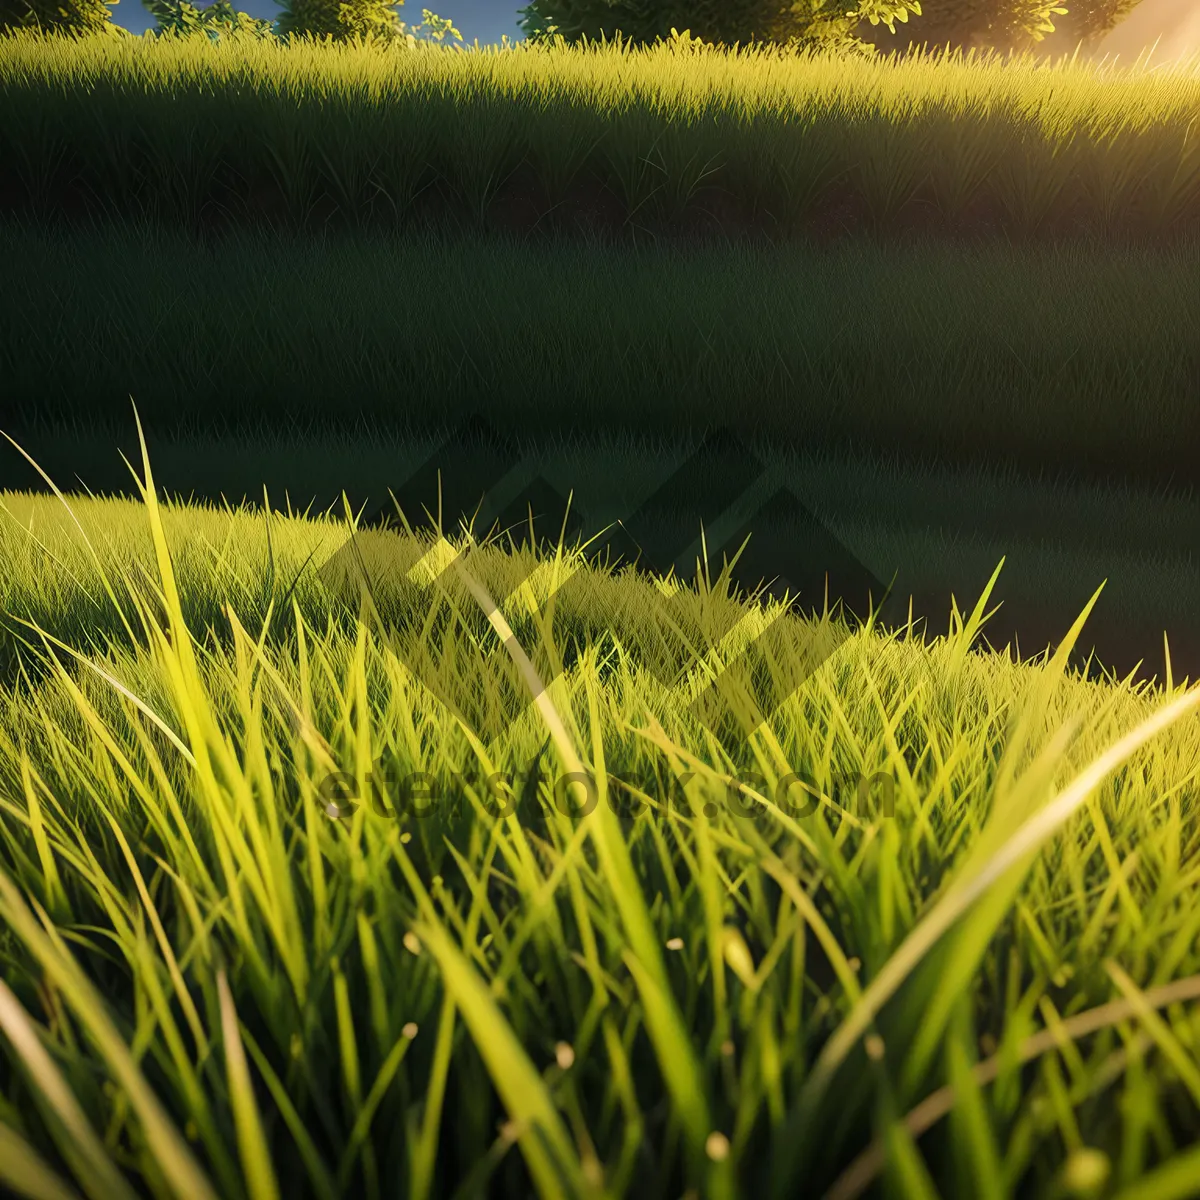 Picture of Golden Wheat Field Under Summer Sun